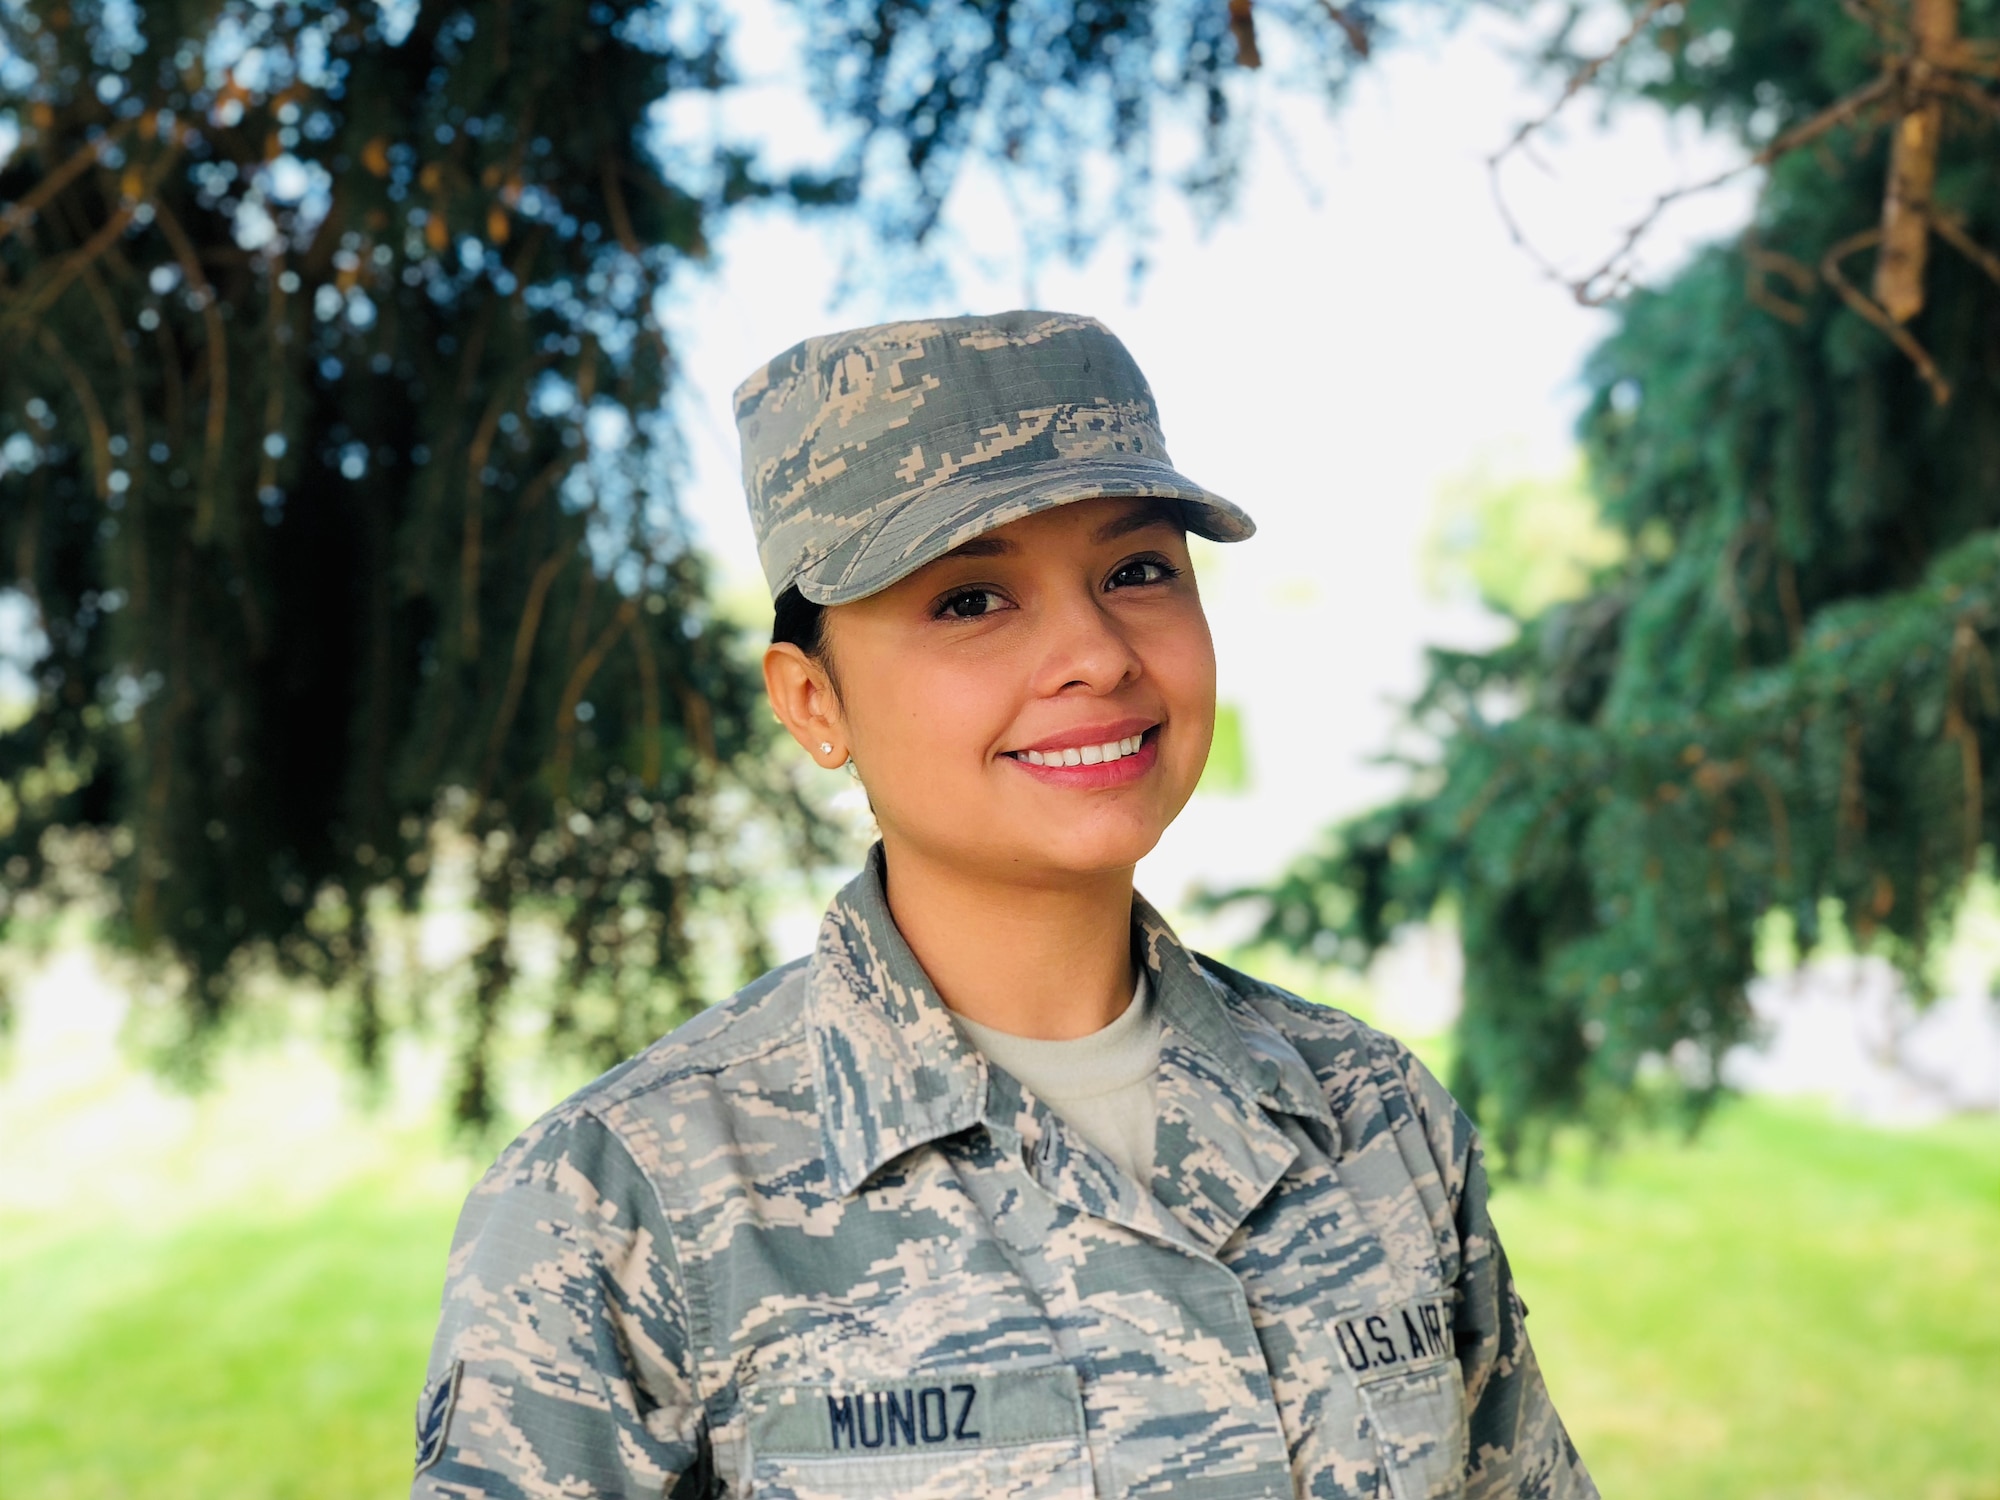 Senior Airman Laura Munoz, 419th Medical Squadron